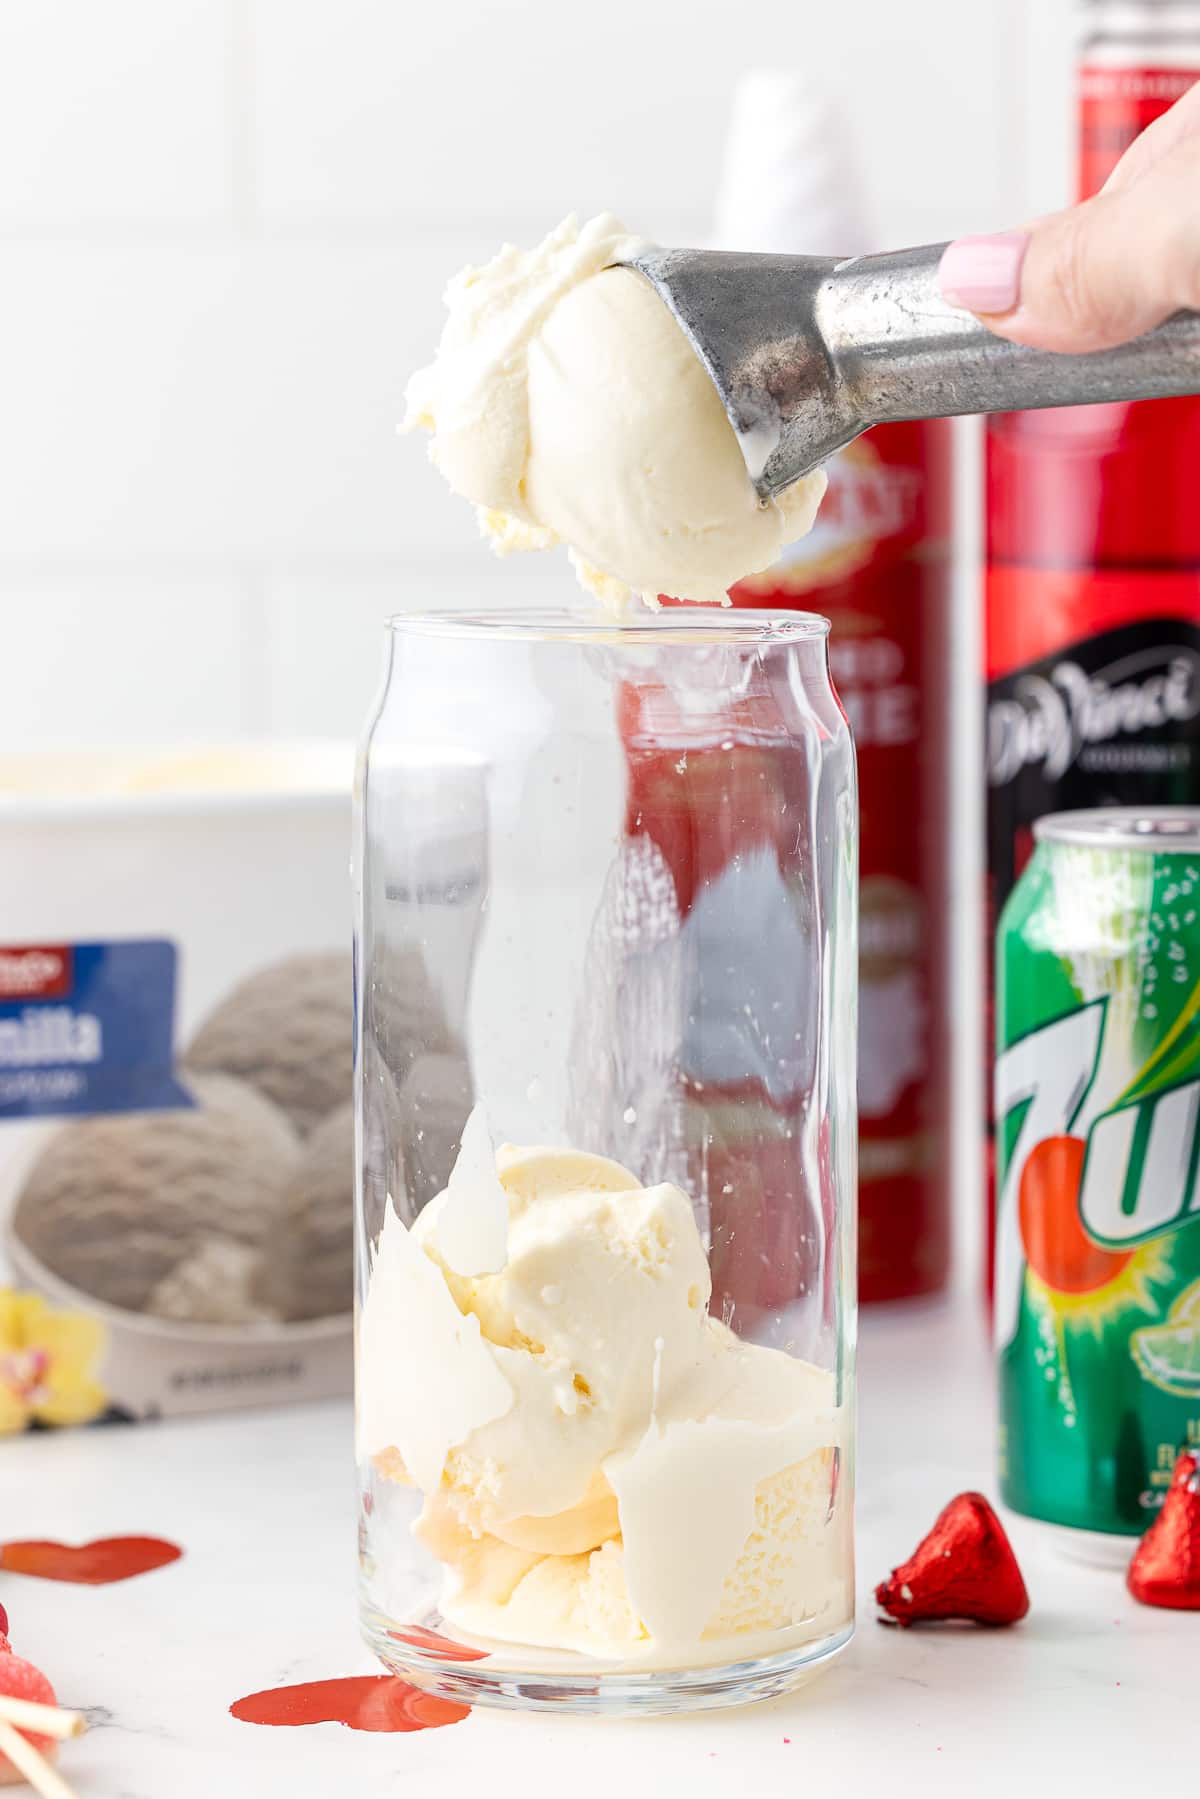 vanilla ice cream going into a glass